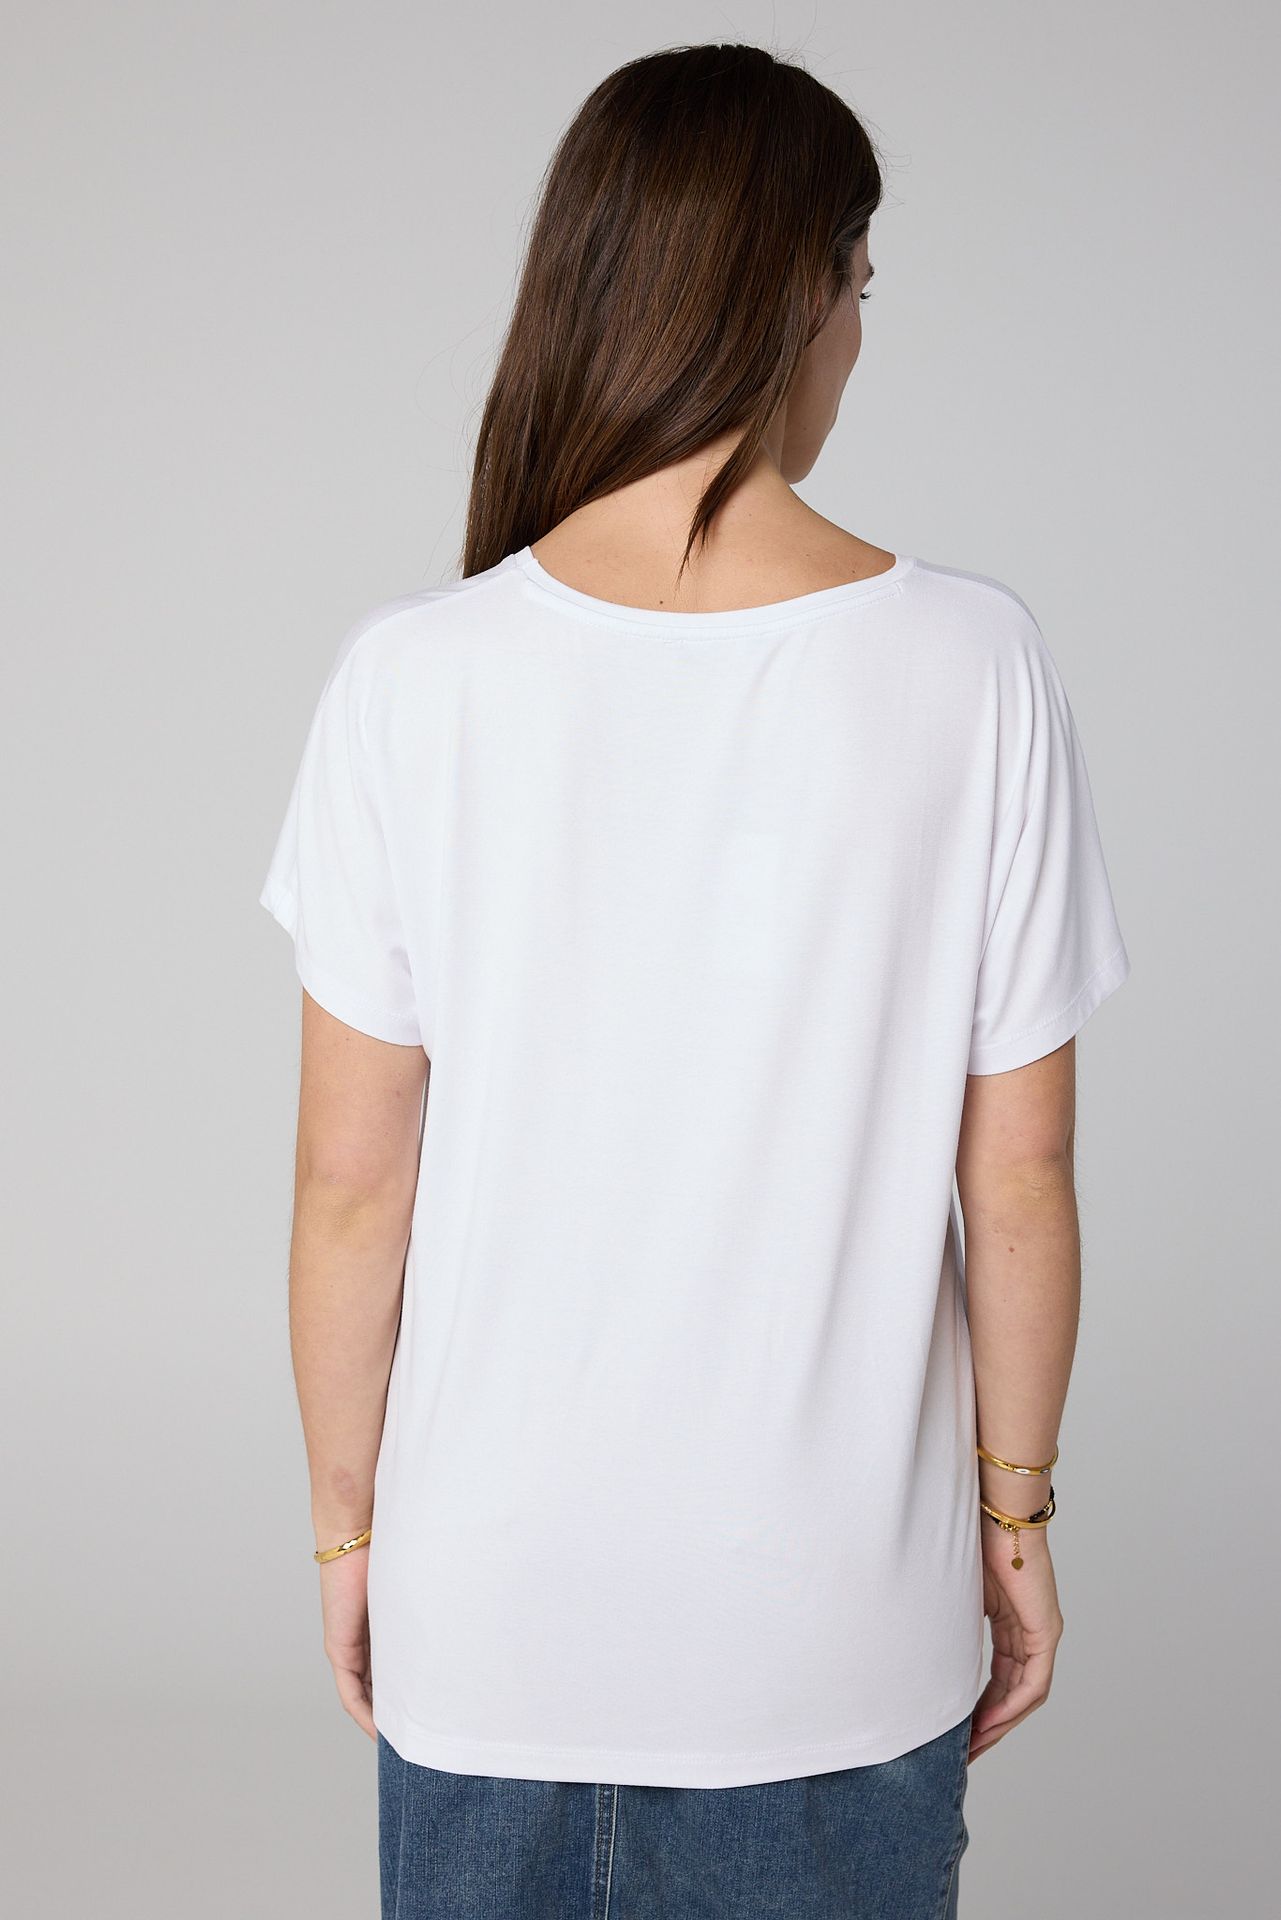 Norah Shirt Maral wit white 208968-100